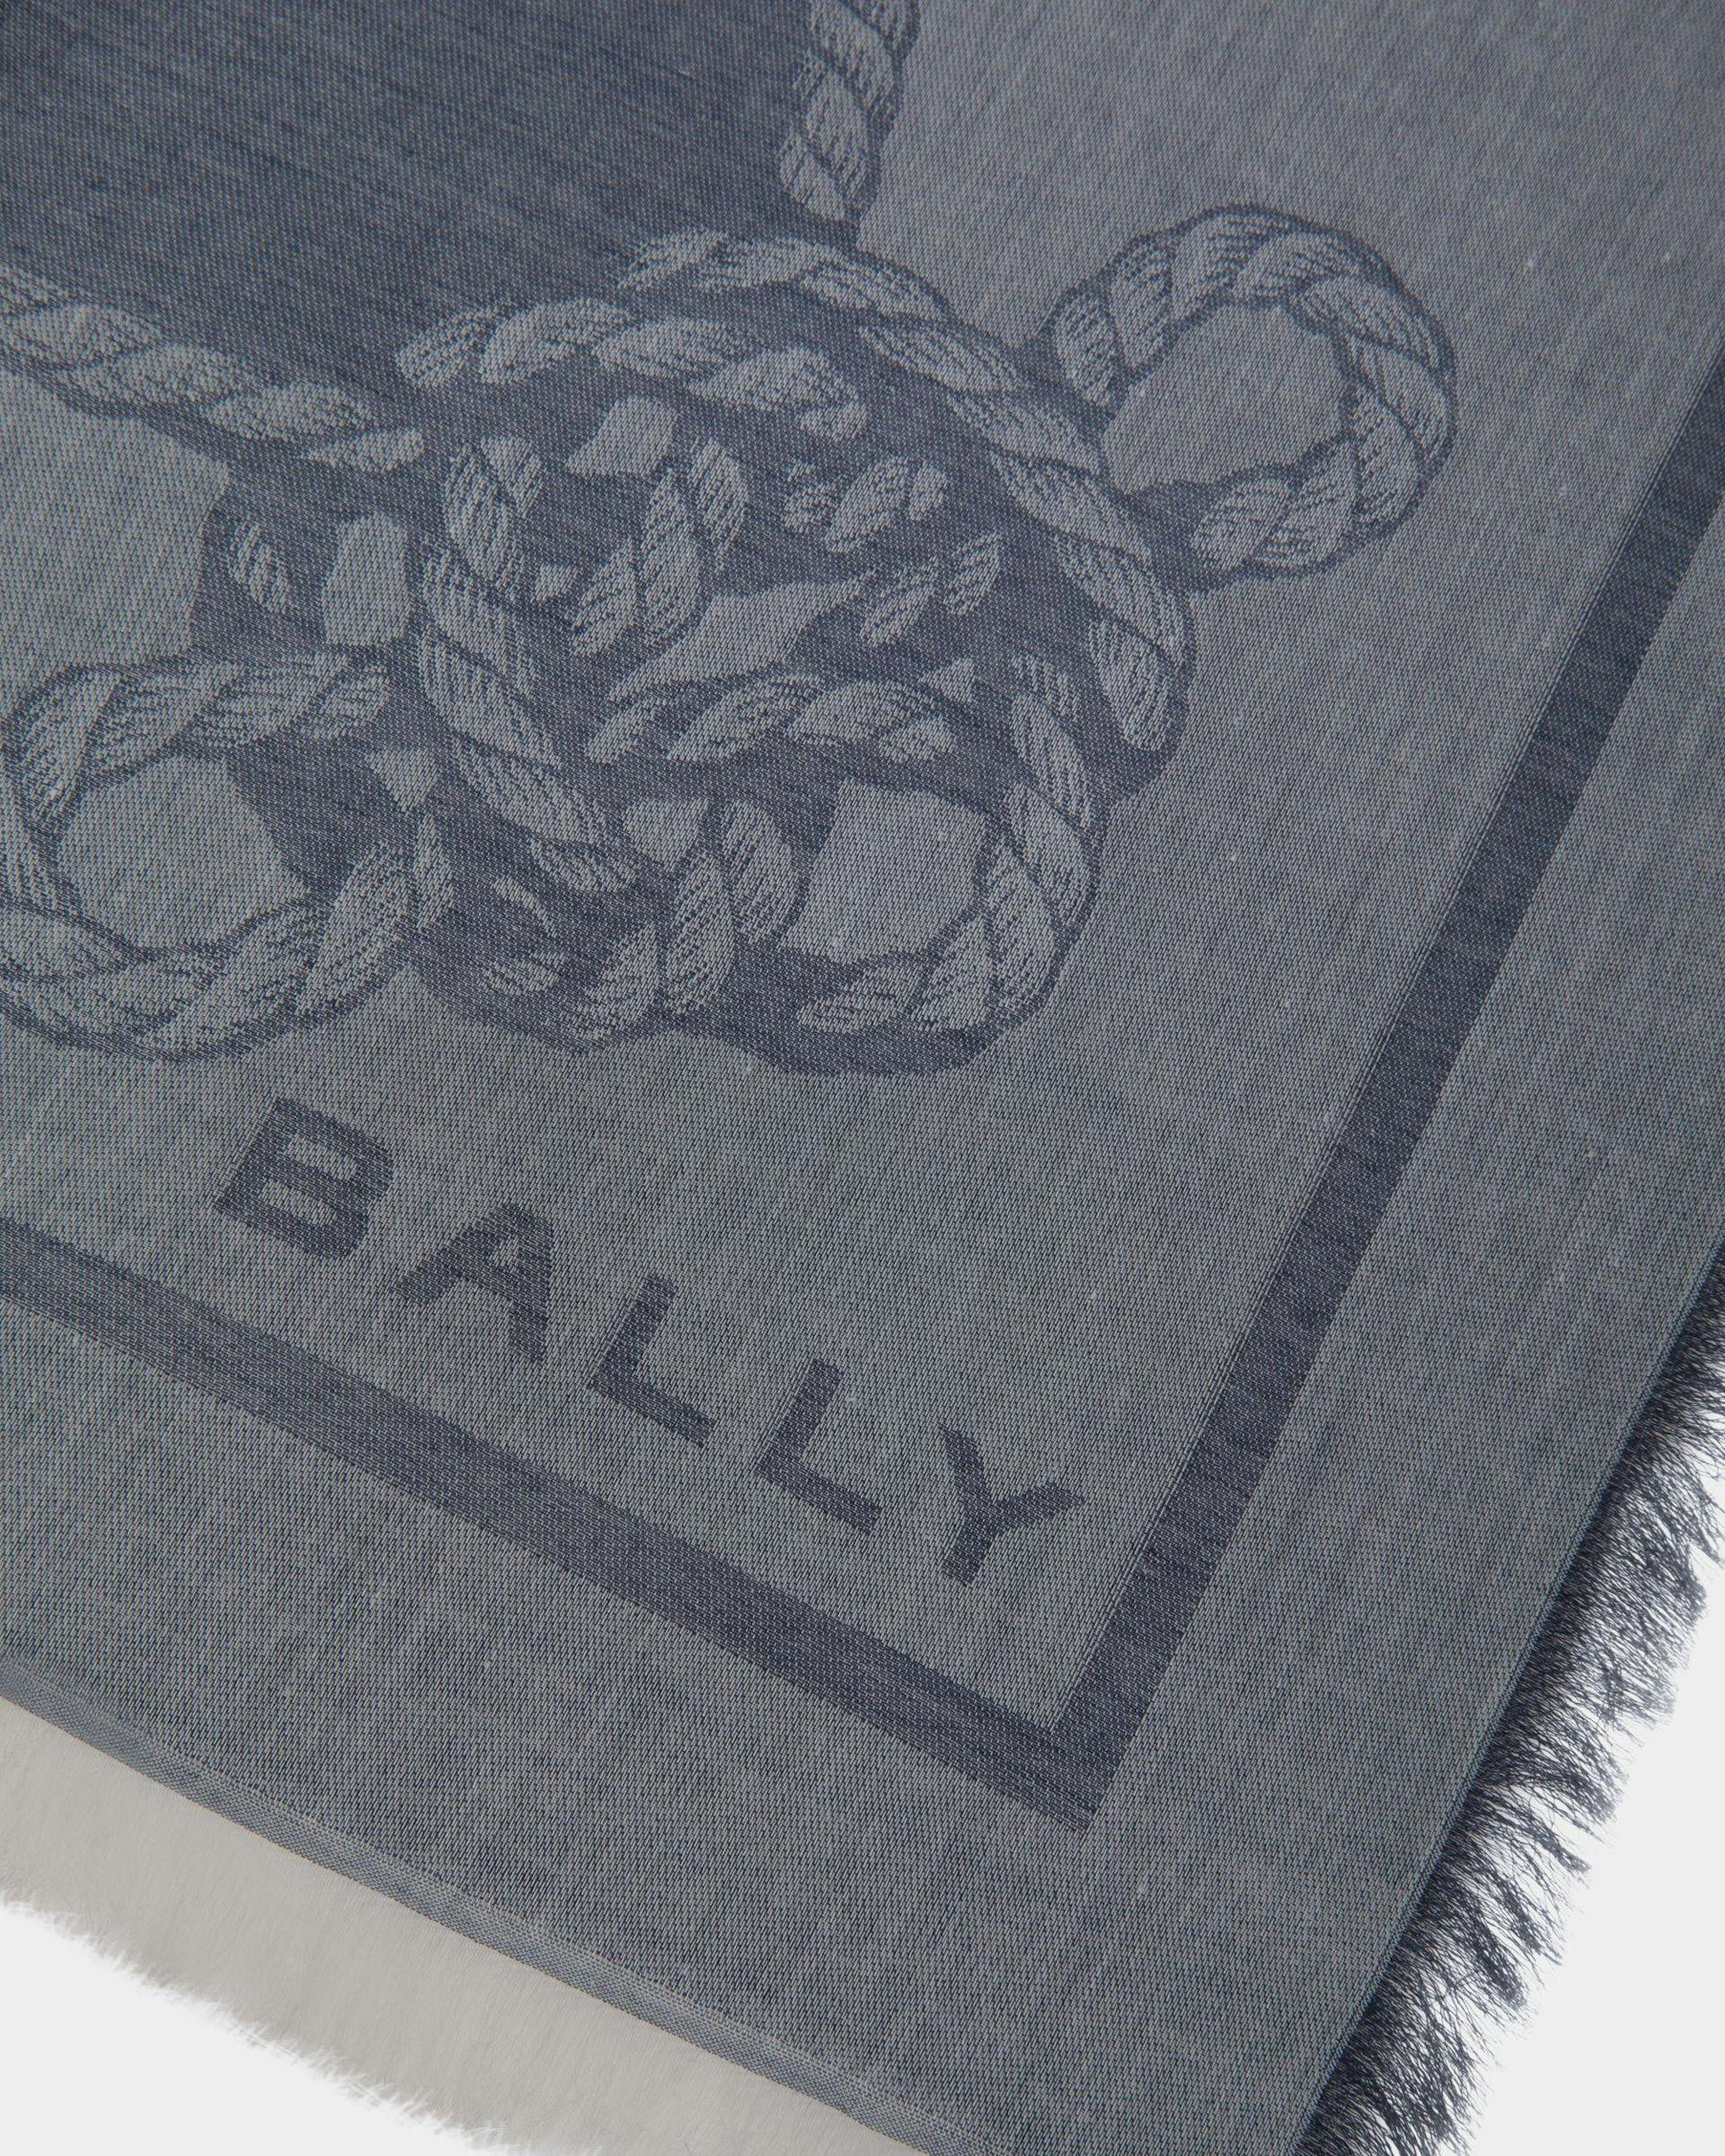 Women's Scarf In Blue Cotton | Bally | Still Life Detail